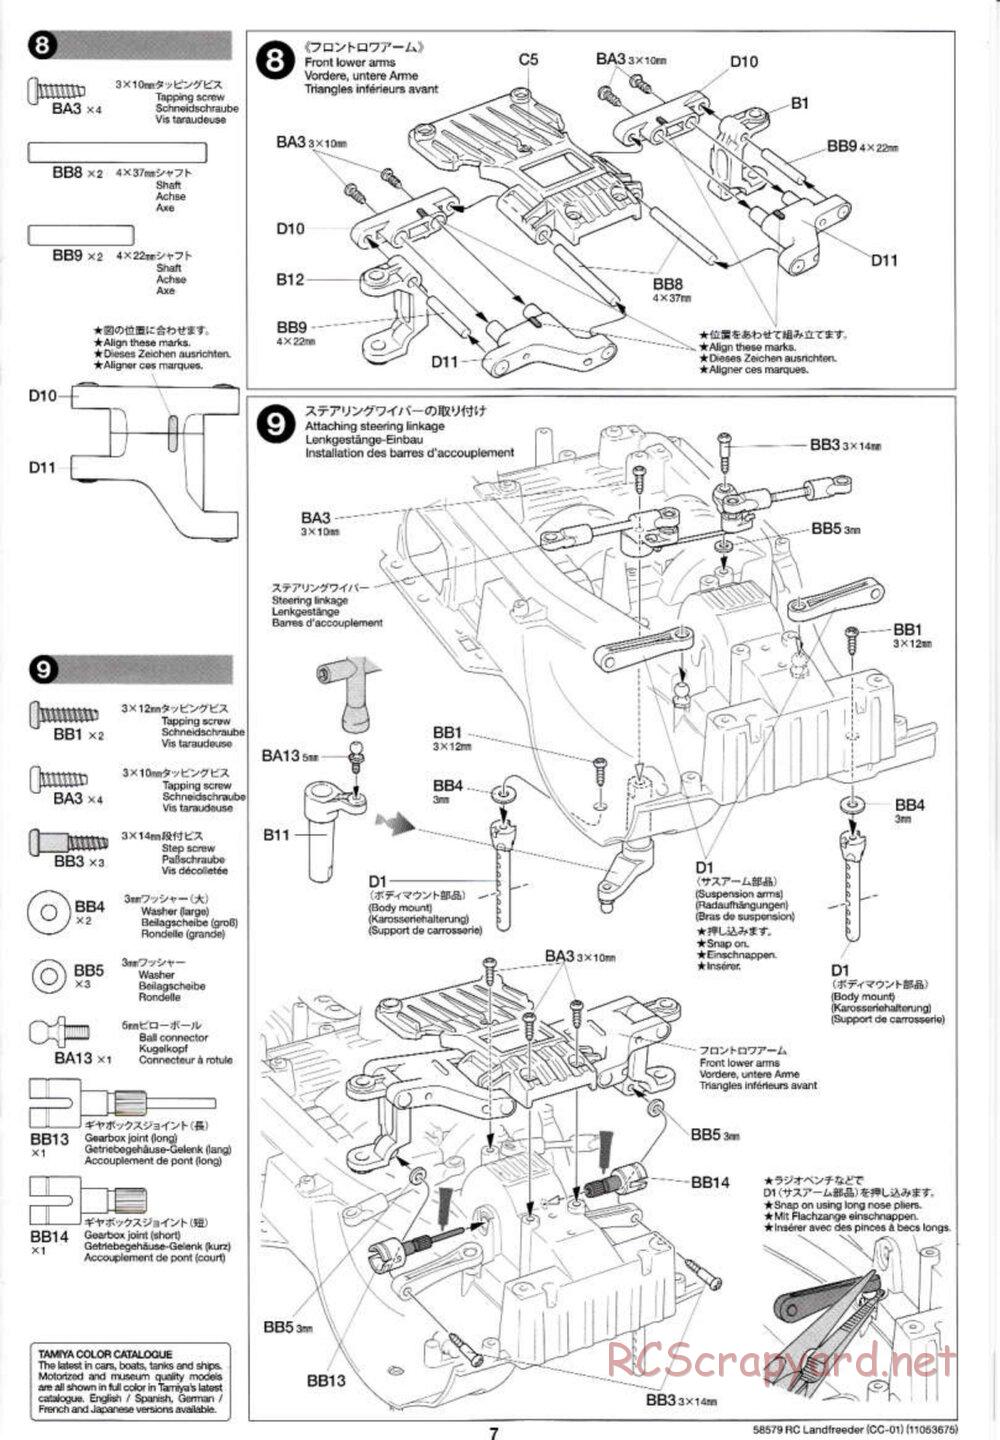 Tamiya - LandFreeder - CC-01 Chassis - Manual - Page 7